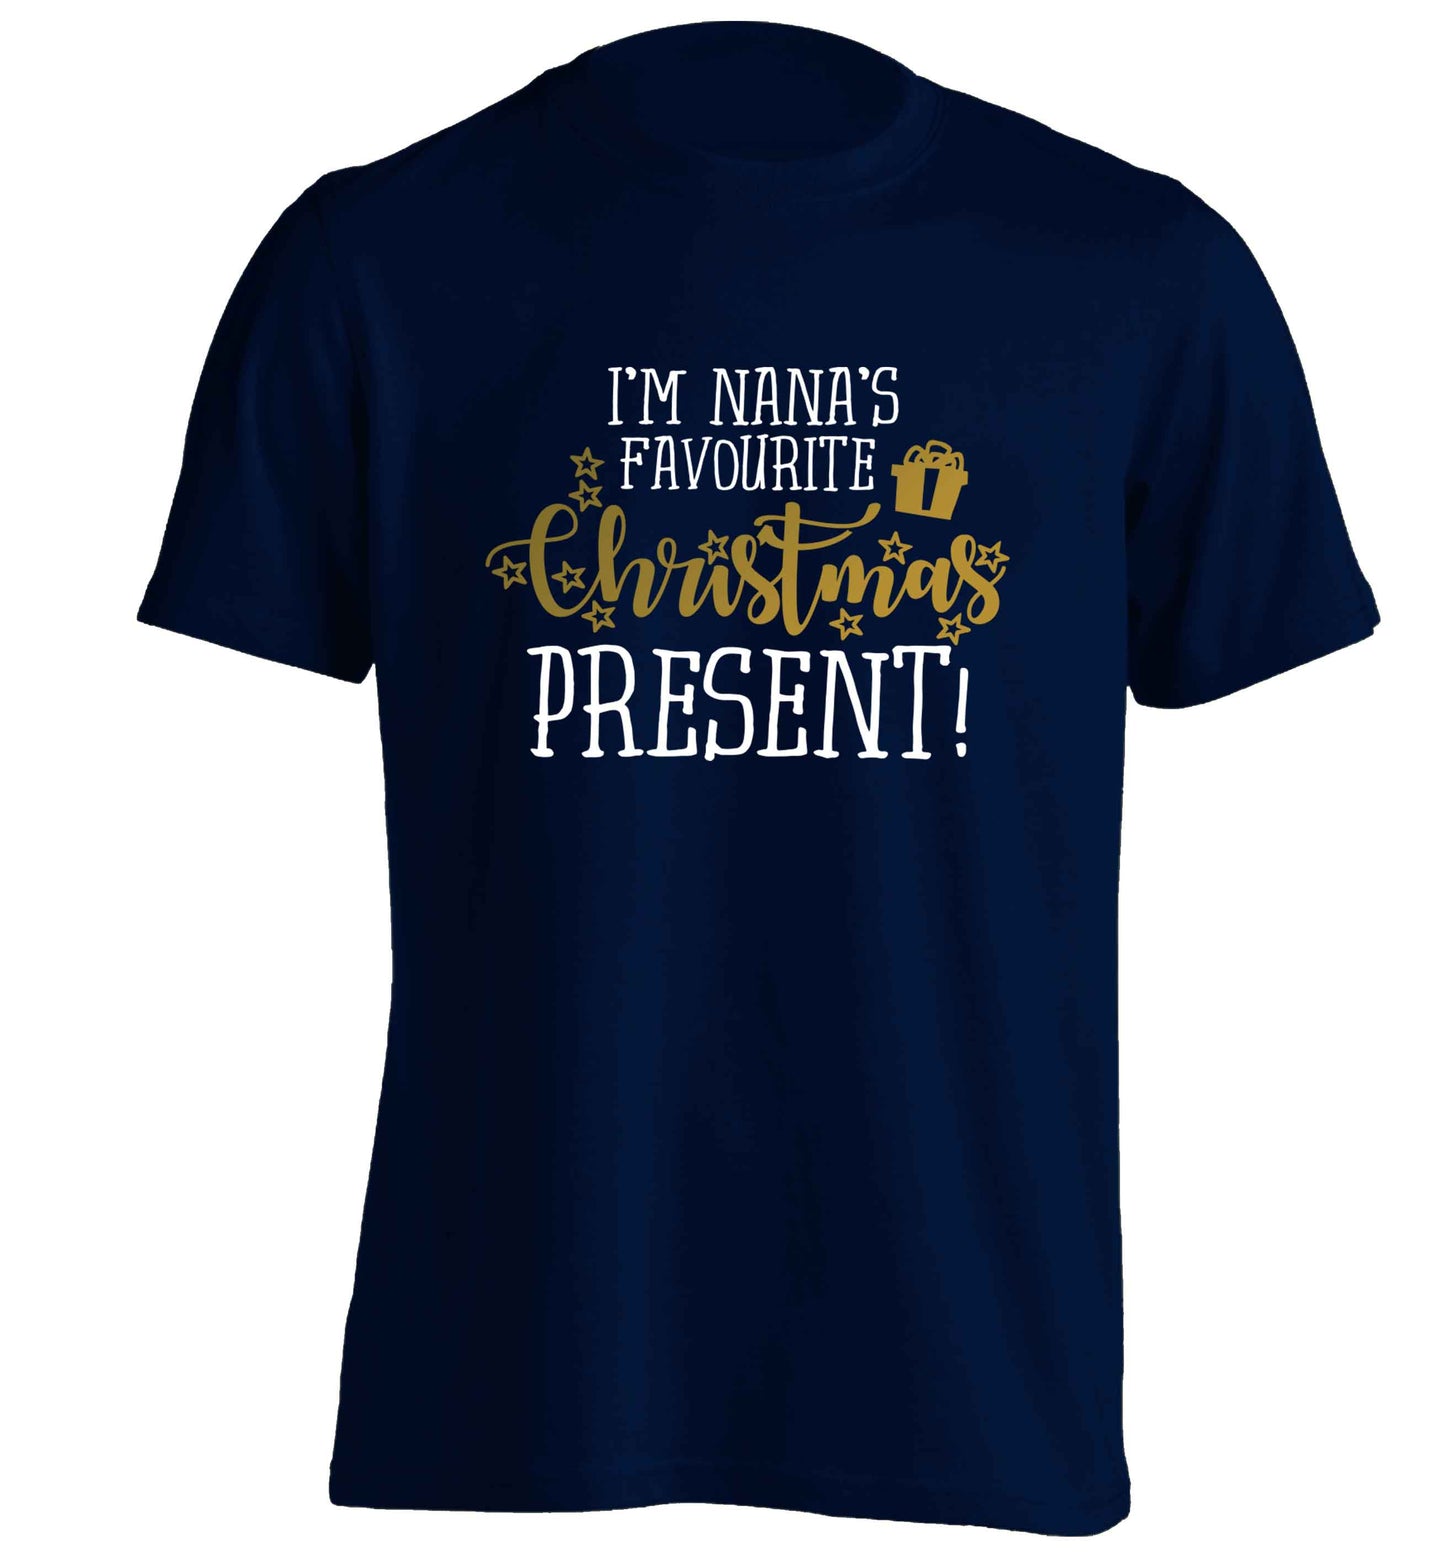 Nana's favourite Christmas present adults unisex navy Tshirt 2XL